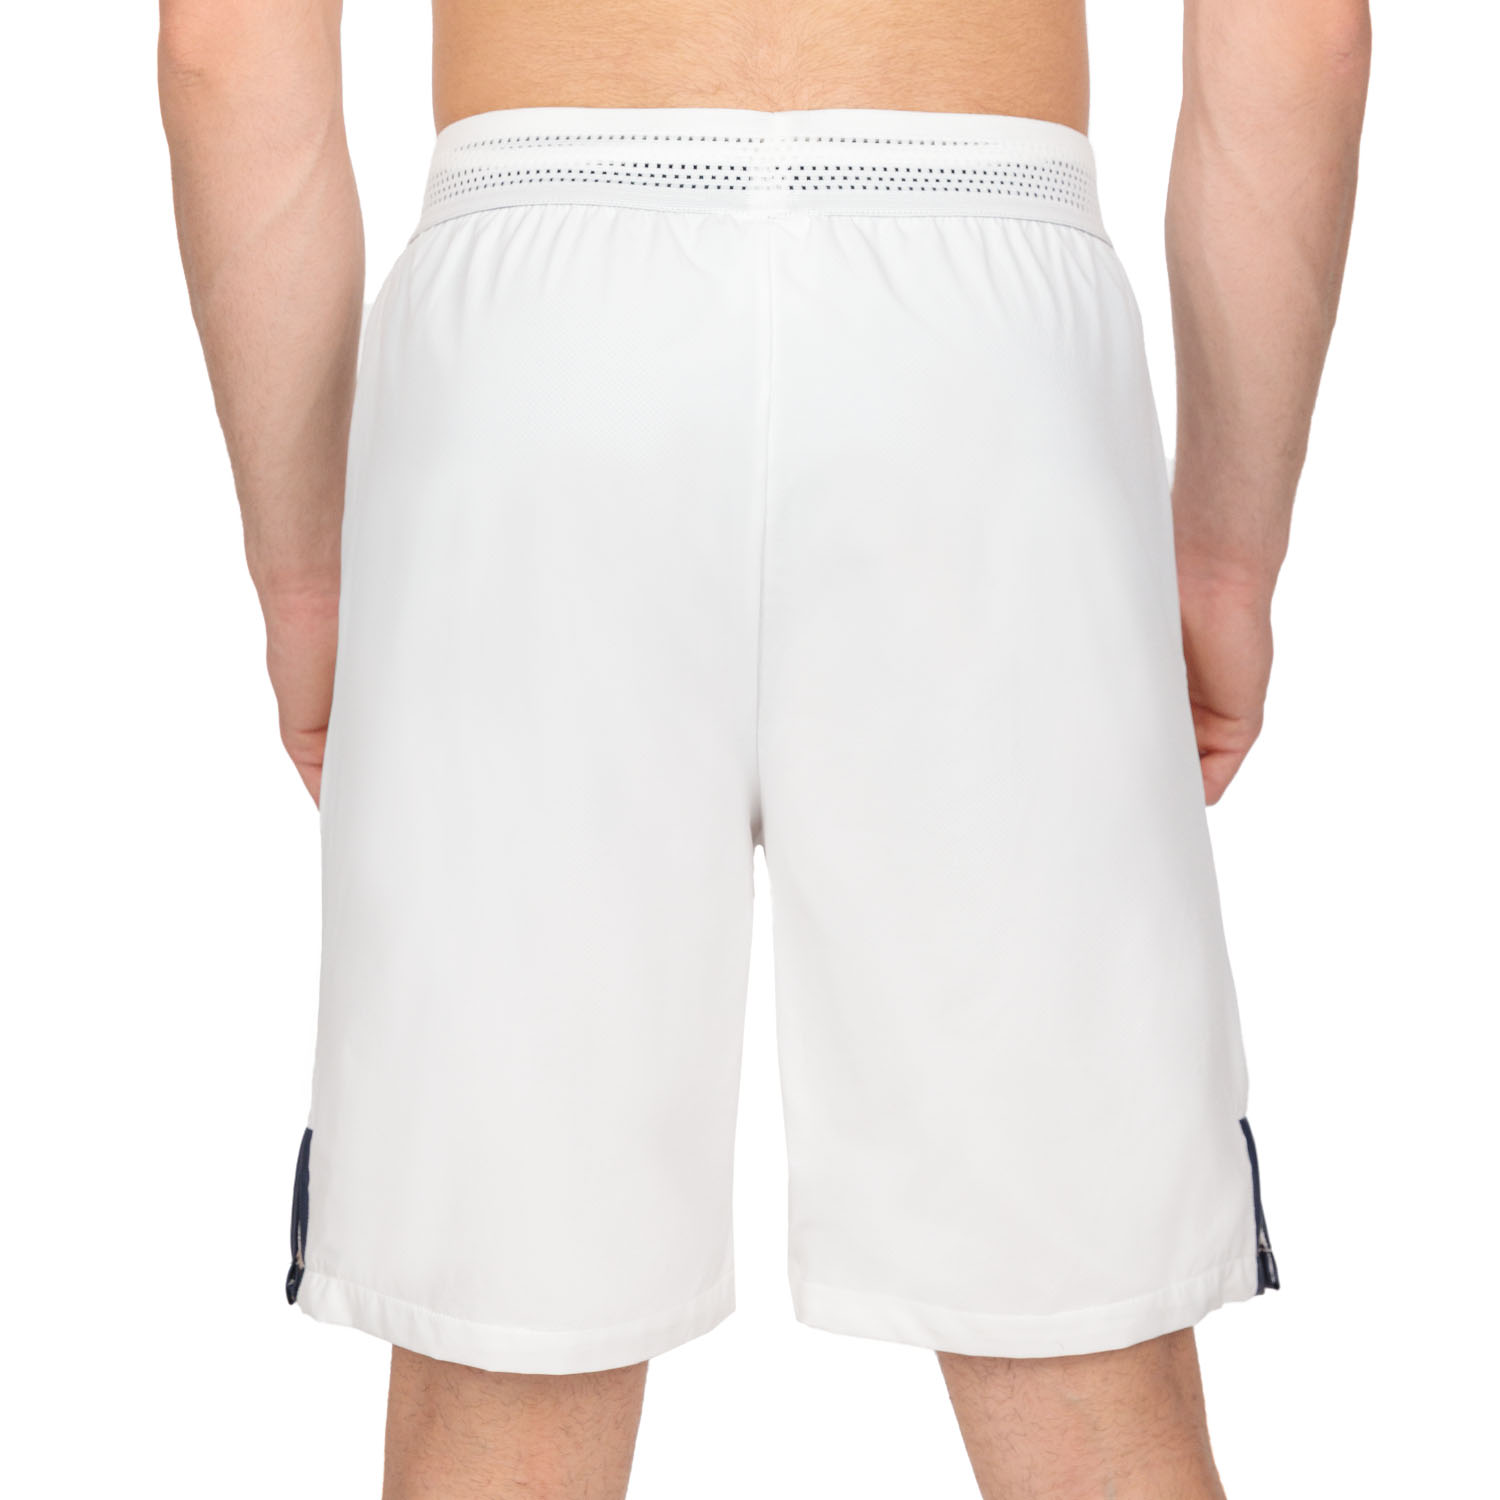 K-Swiss Core Team 8in Men's Tennis Shorts - White